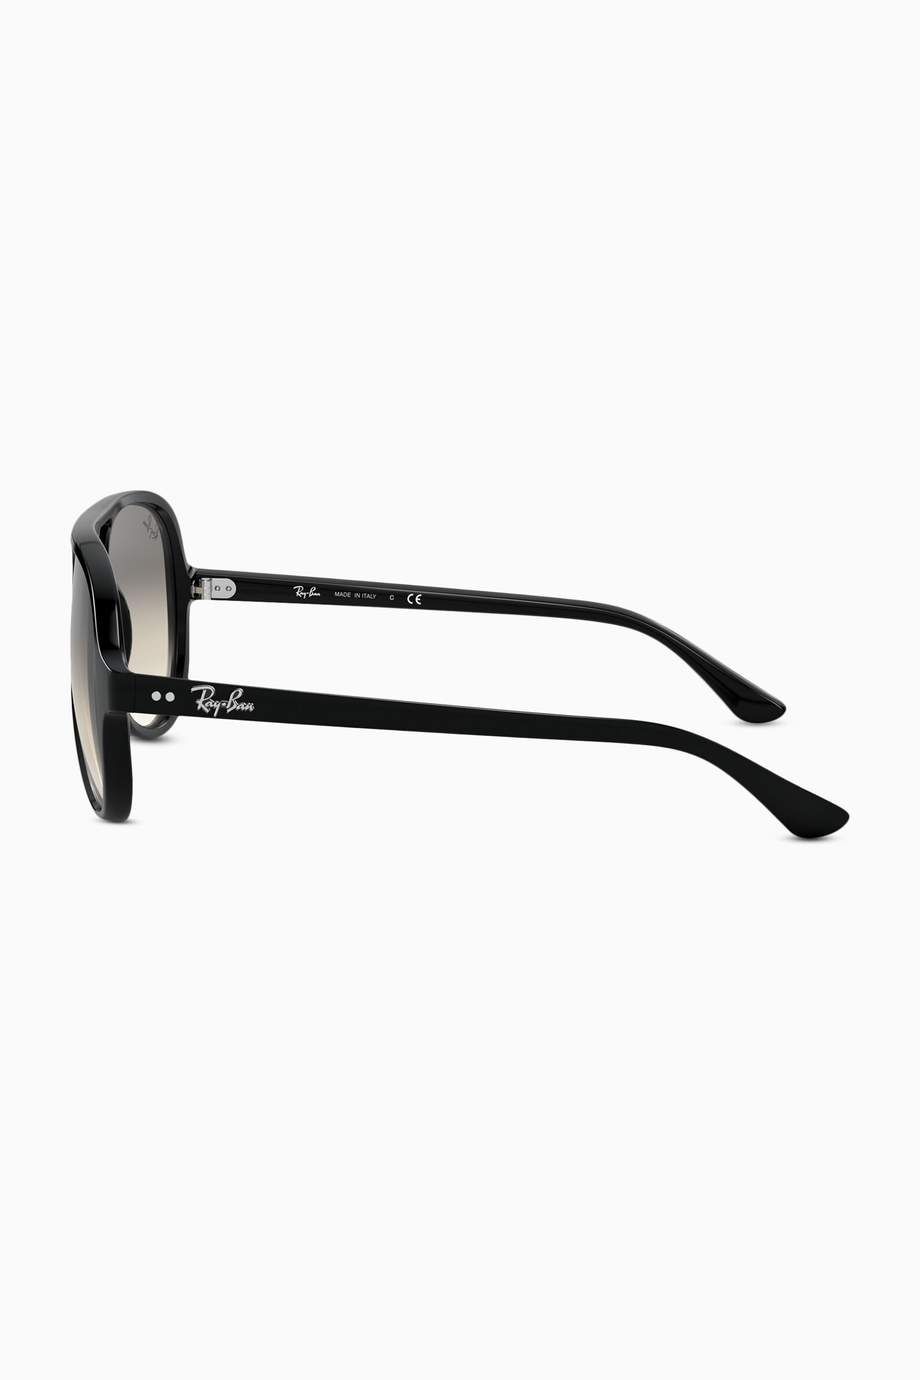 Shop Rayban Black Cats 5000 Aviator Sunglasses For Women Ounass Uae